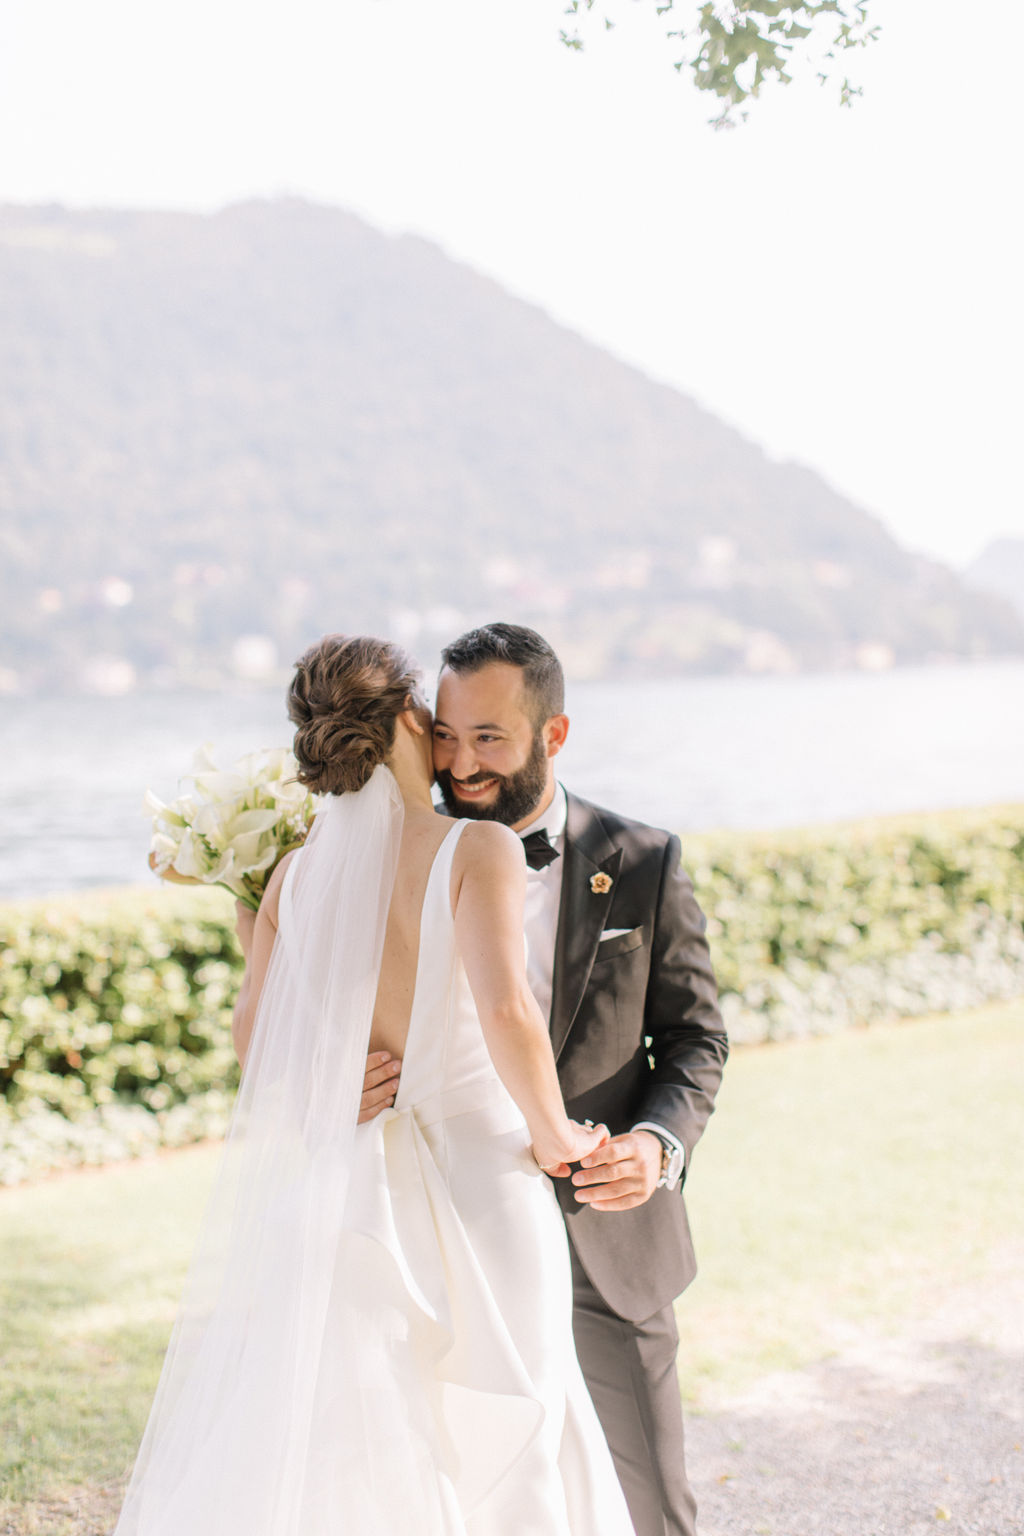 Christina & Andrew - The Lake Como Wedding Planner